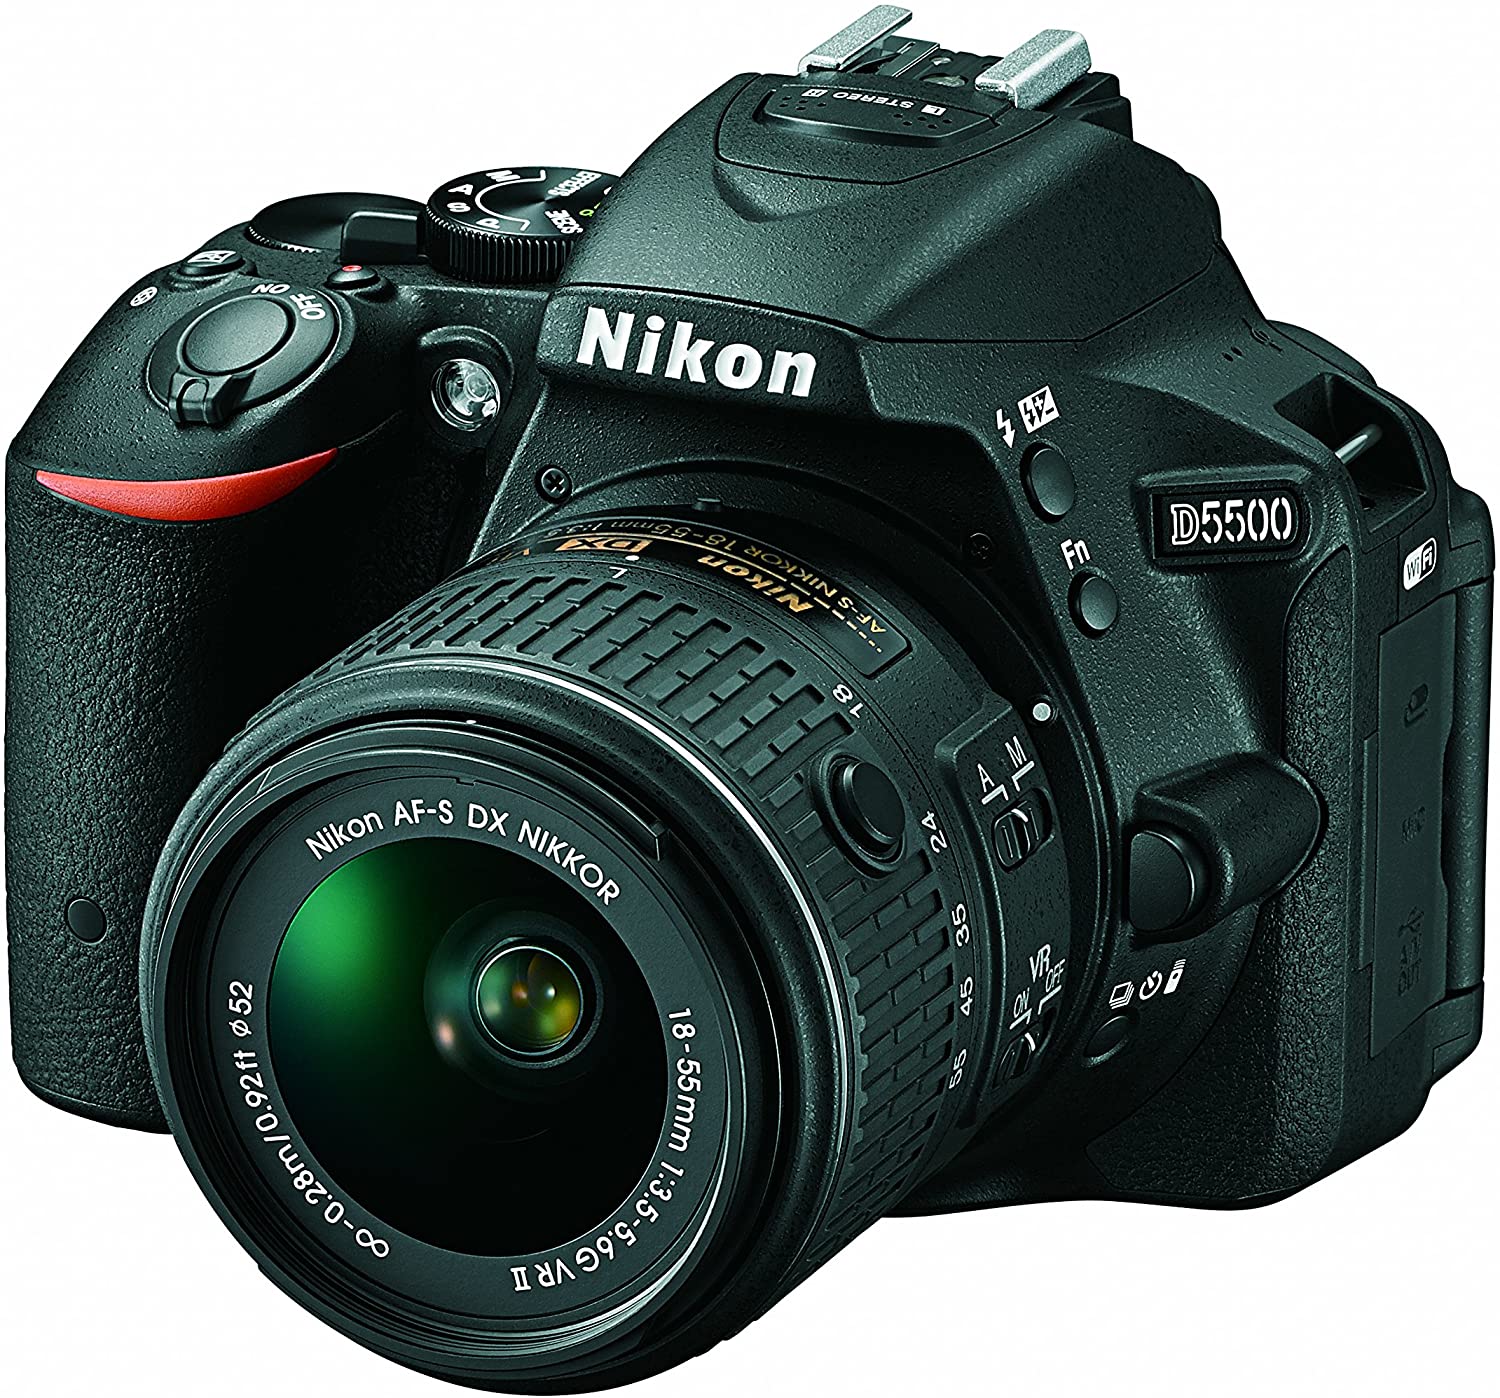 Nikon D5500 Specs 2 image 